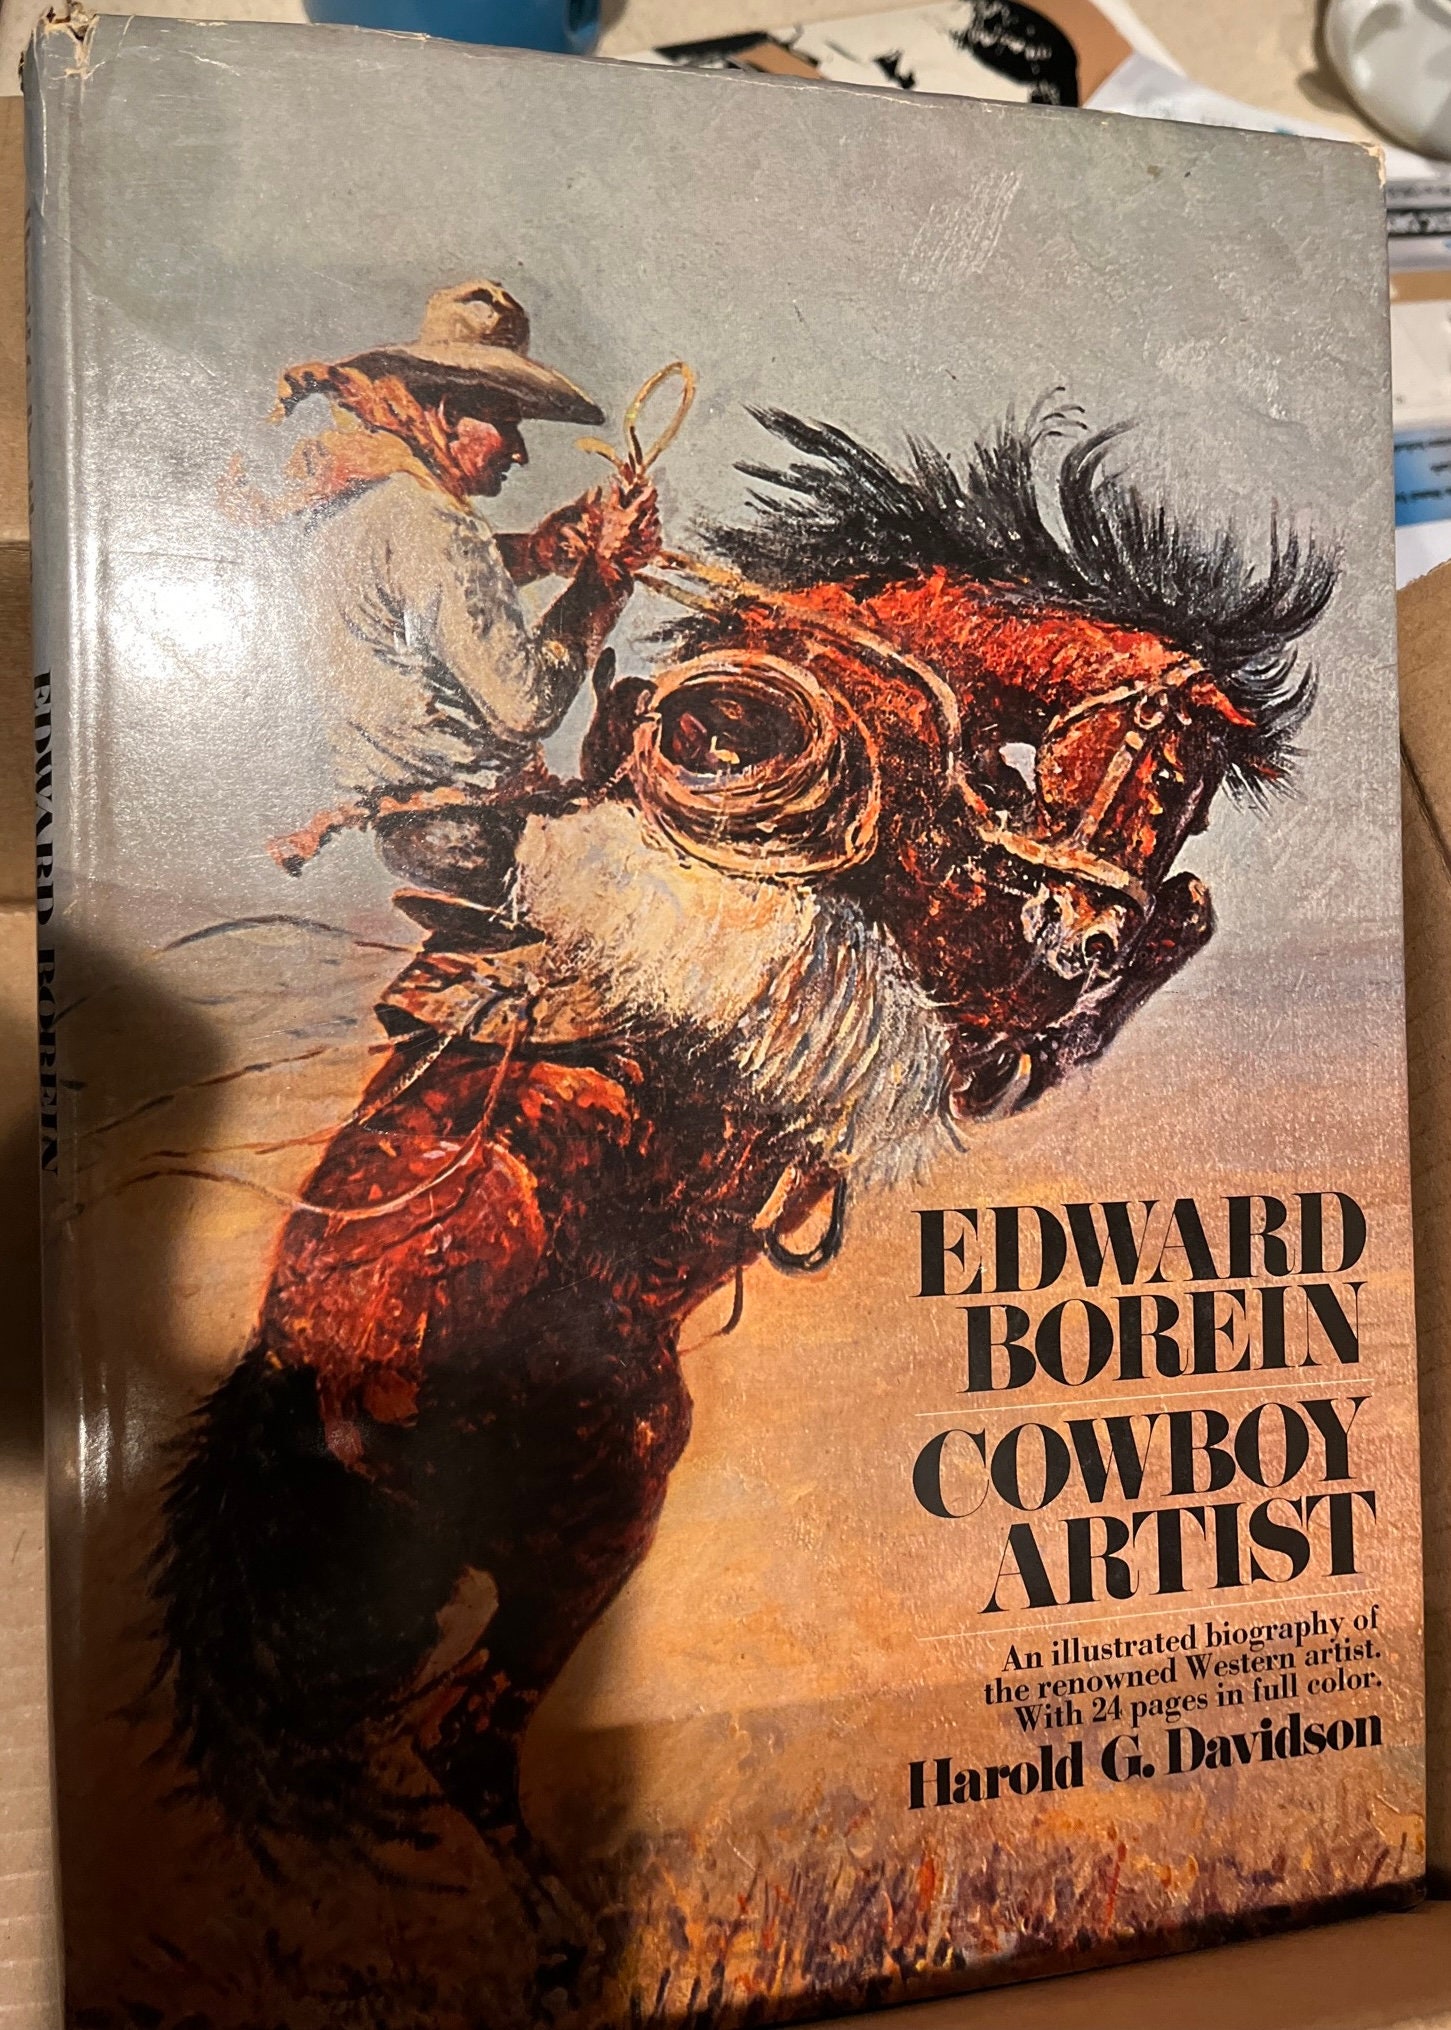 Harold Davidson: Edward Borein Cowboy Artist, 1st HB W/dj 